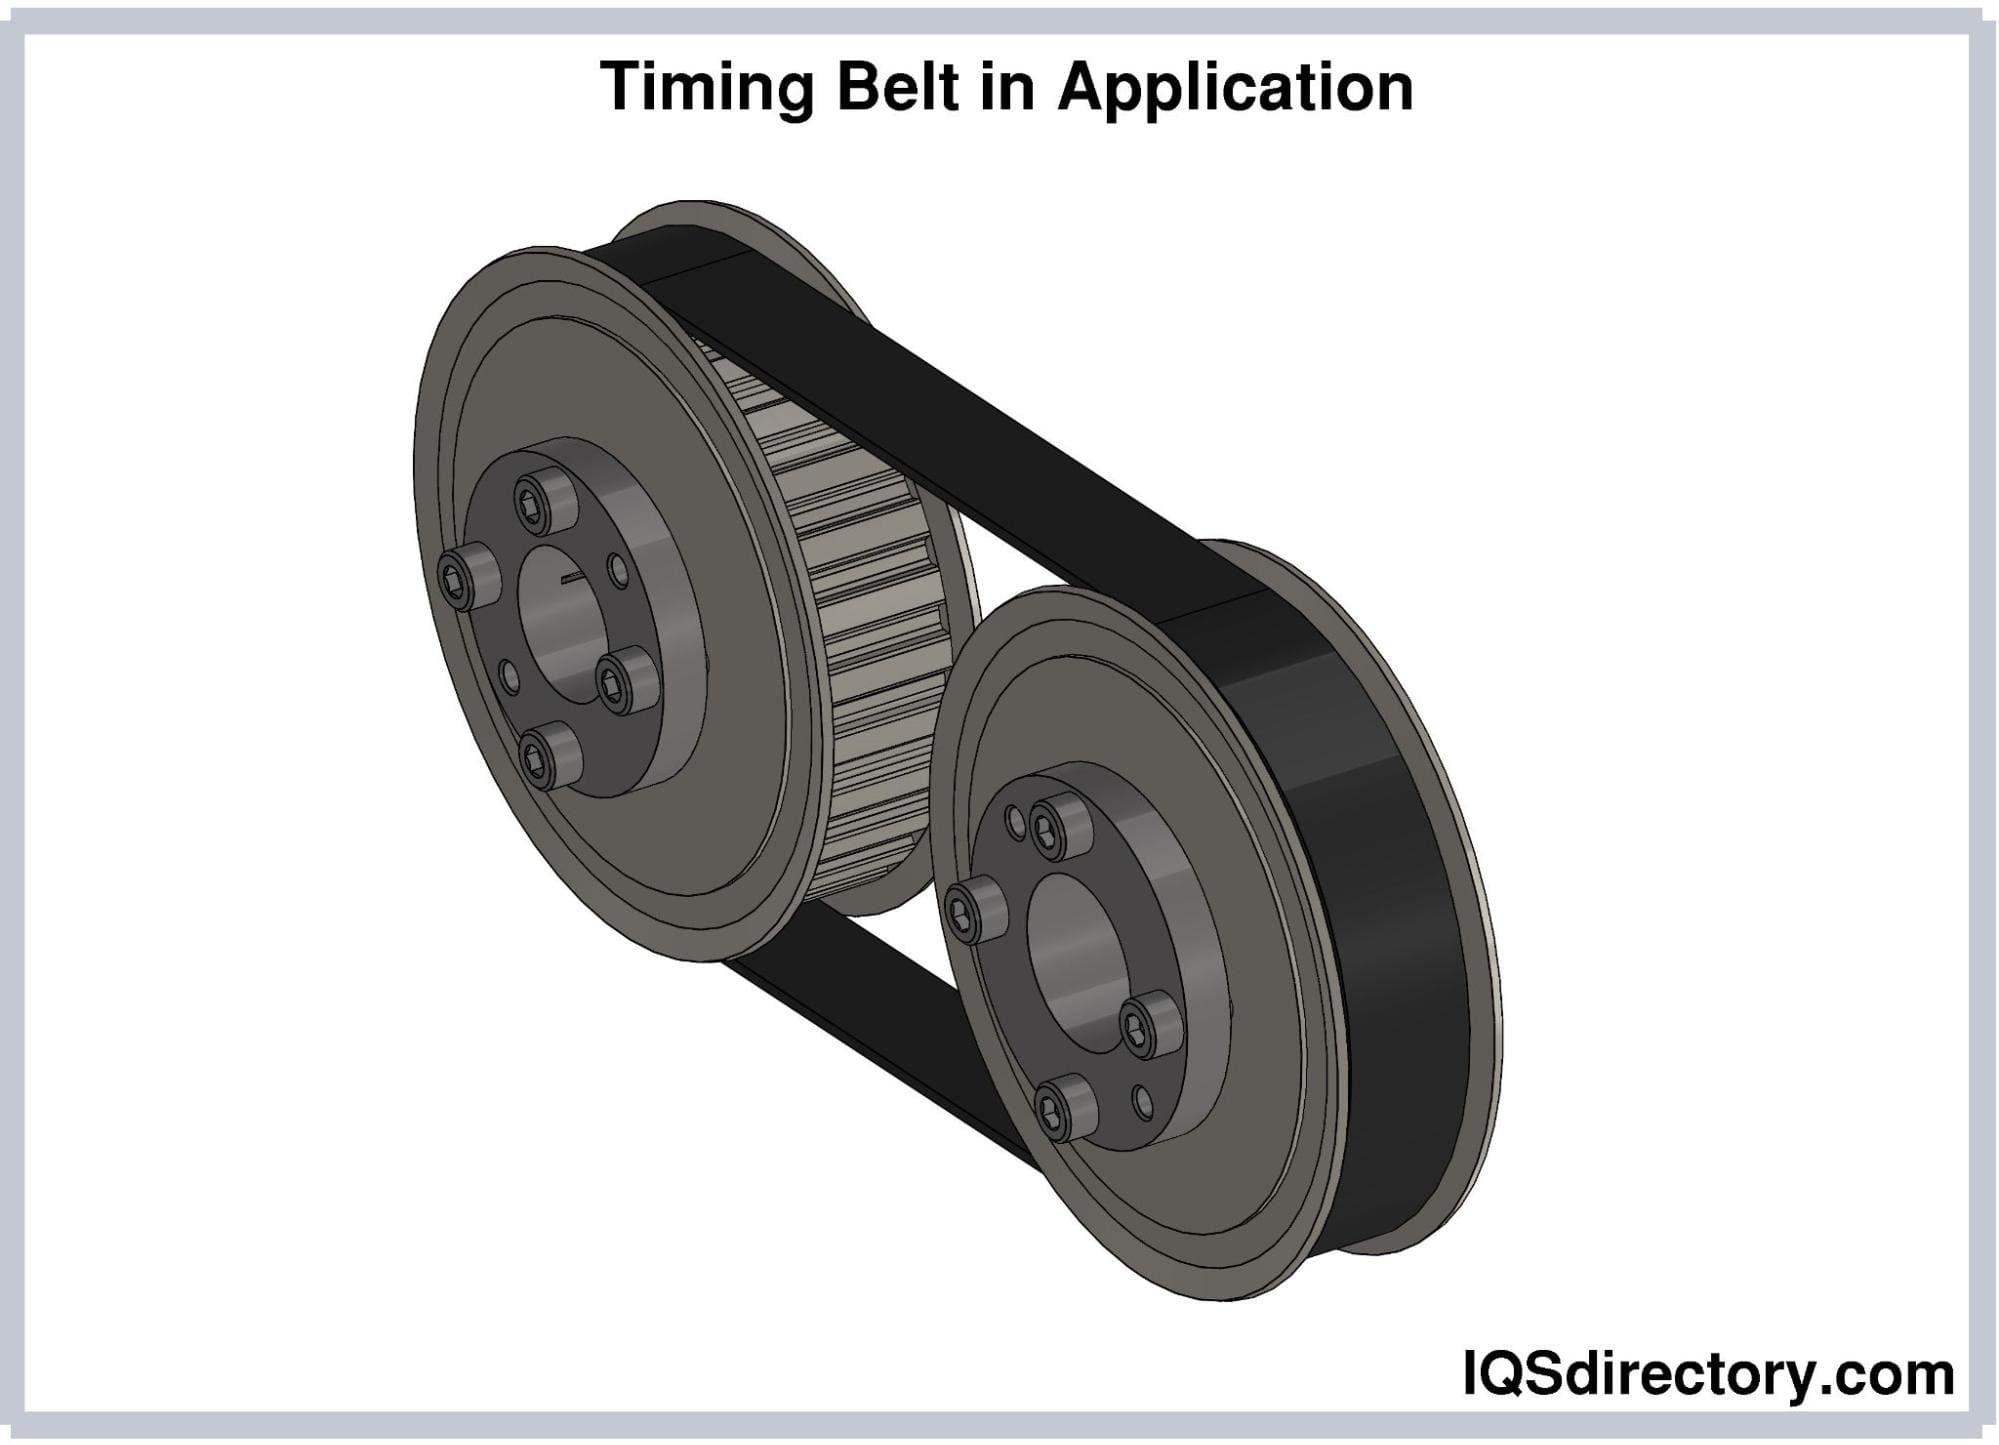 Timing Belt in Application